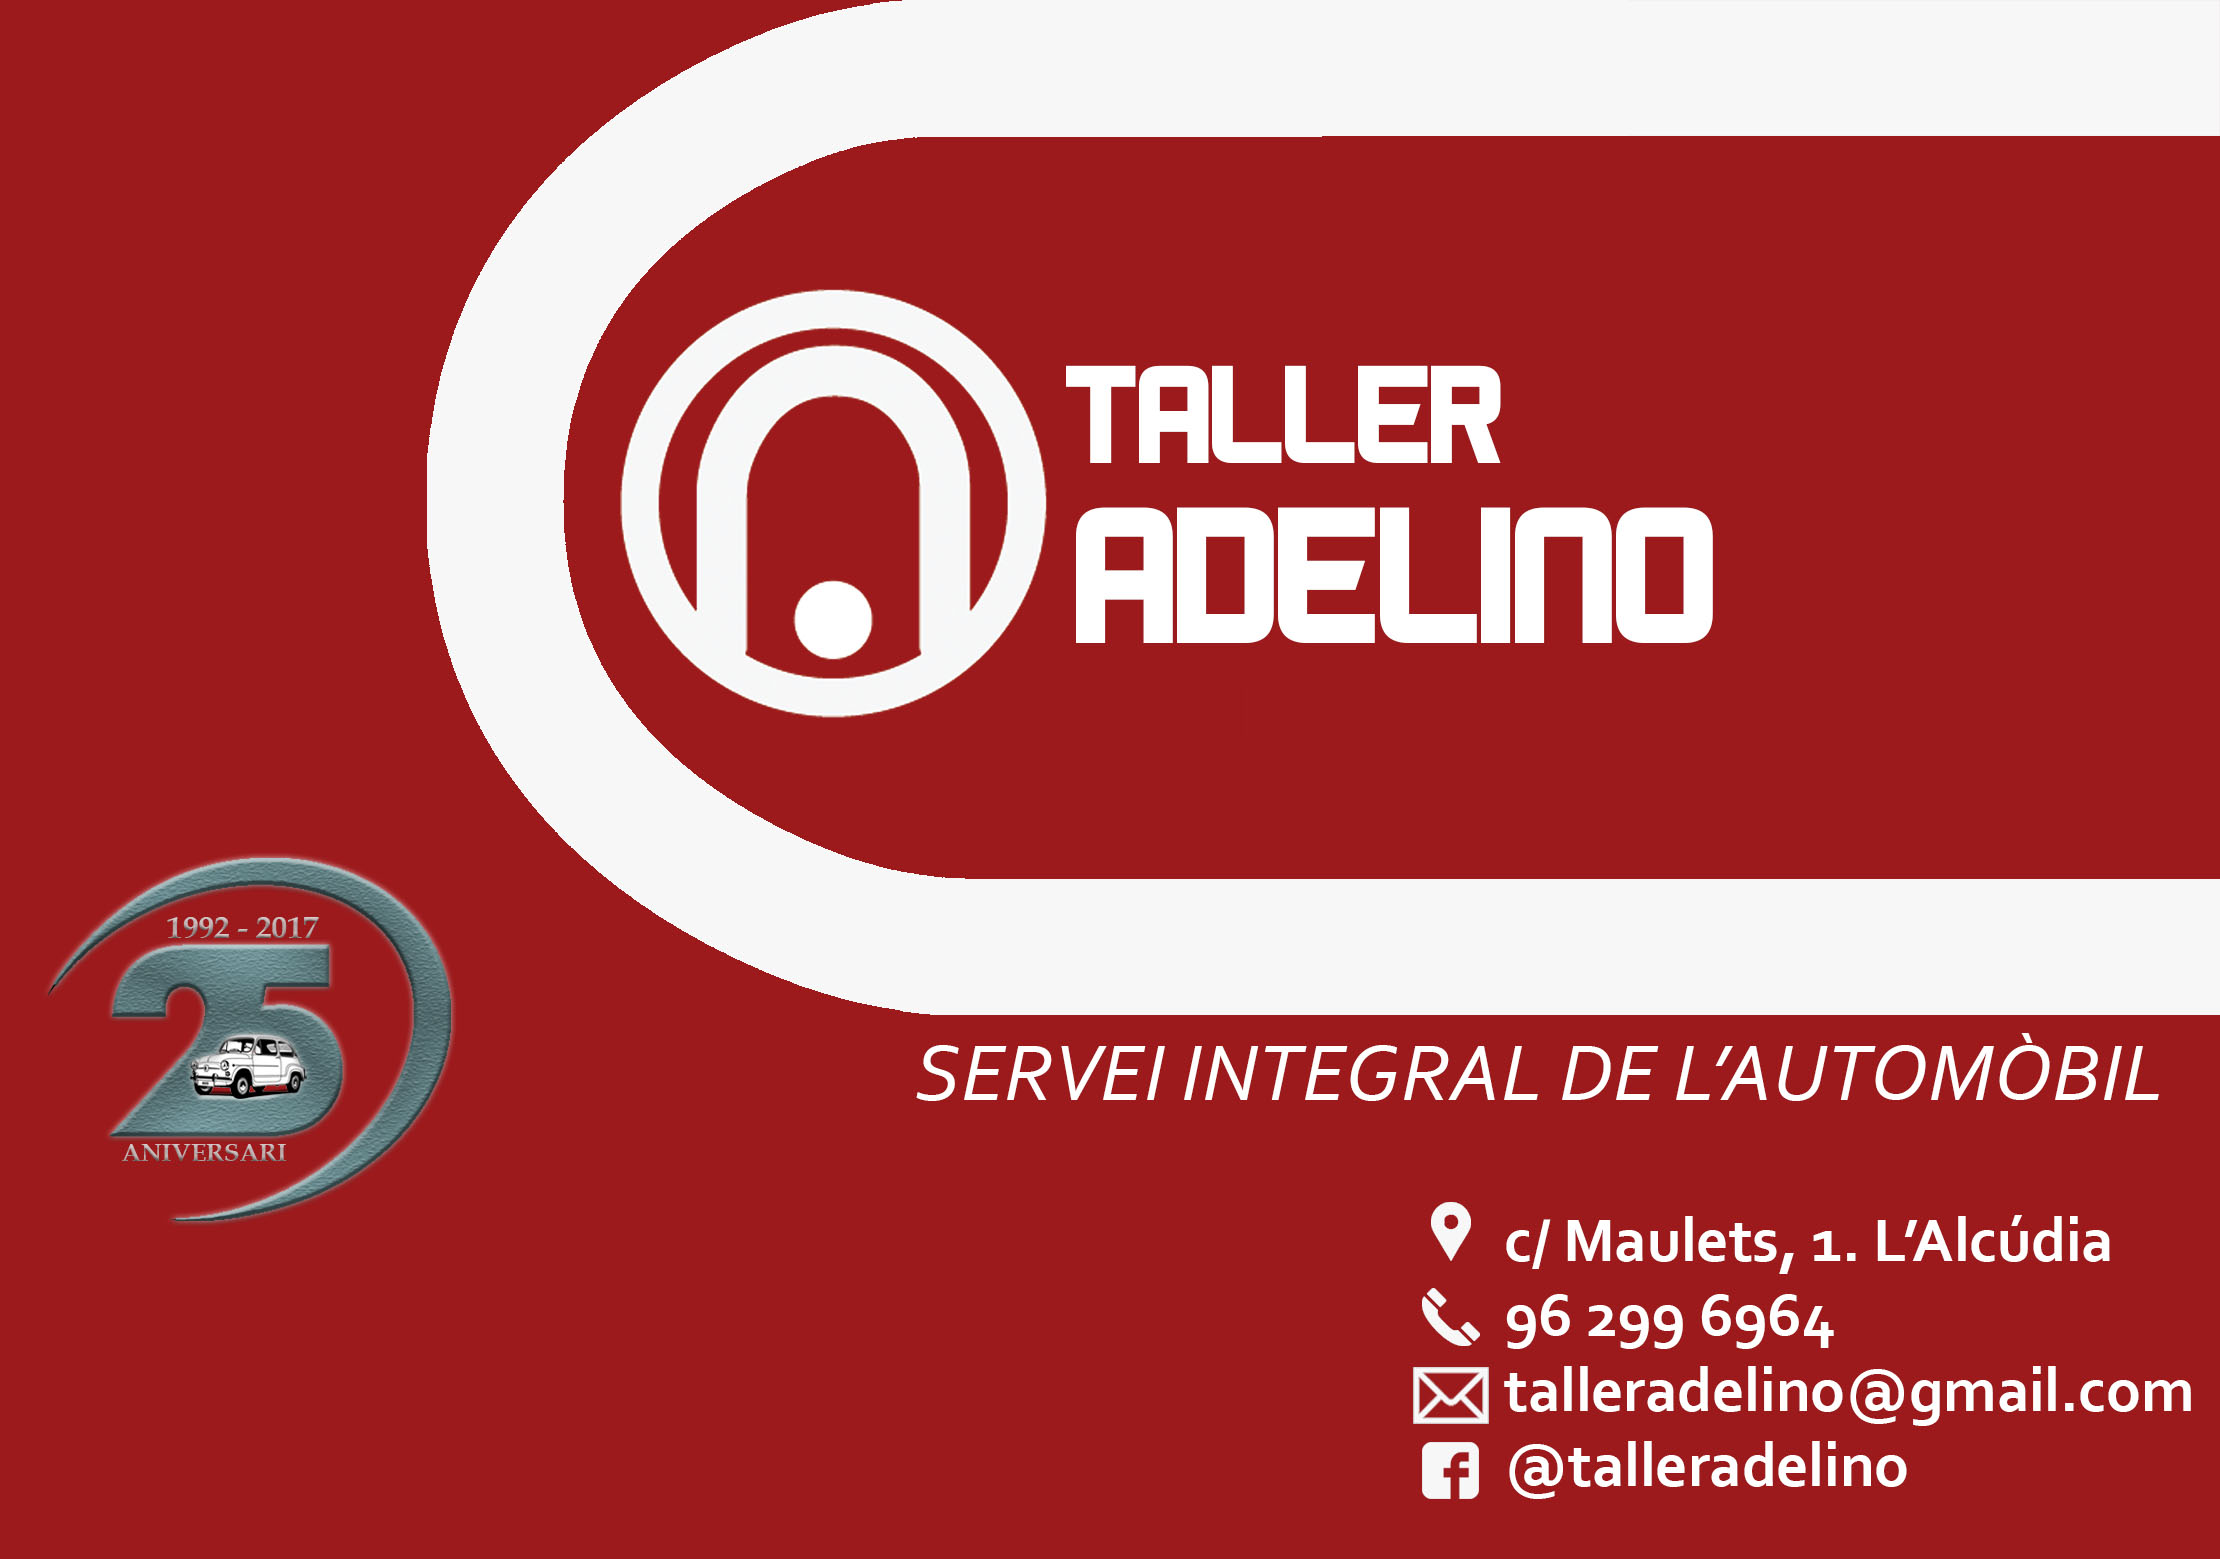 Taller Adelino, servei integral de l'automòbil